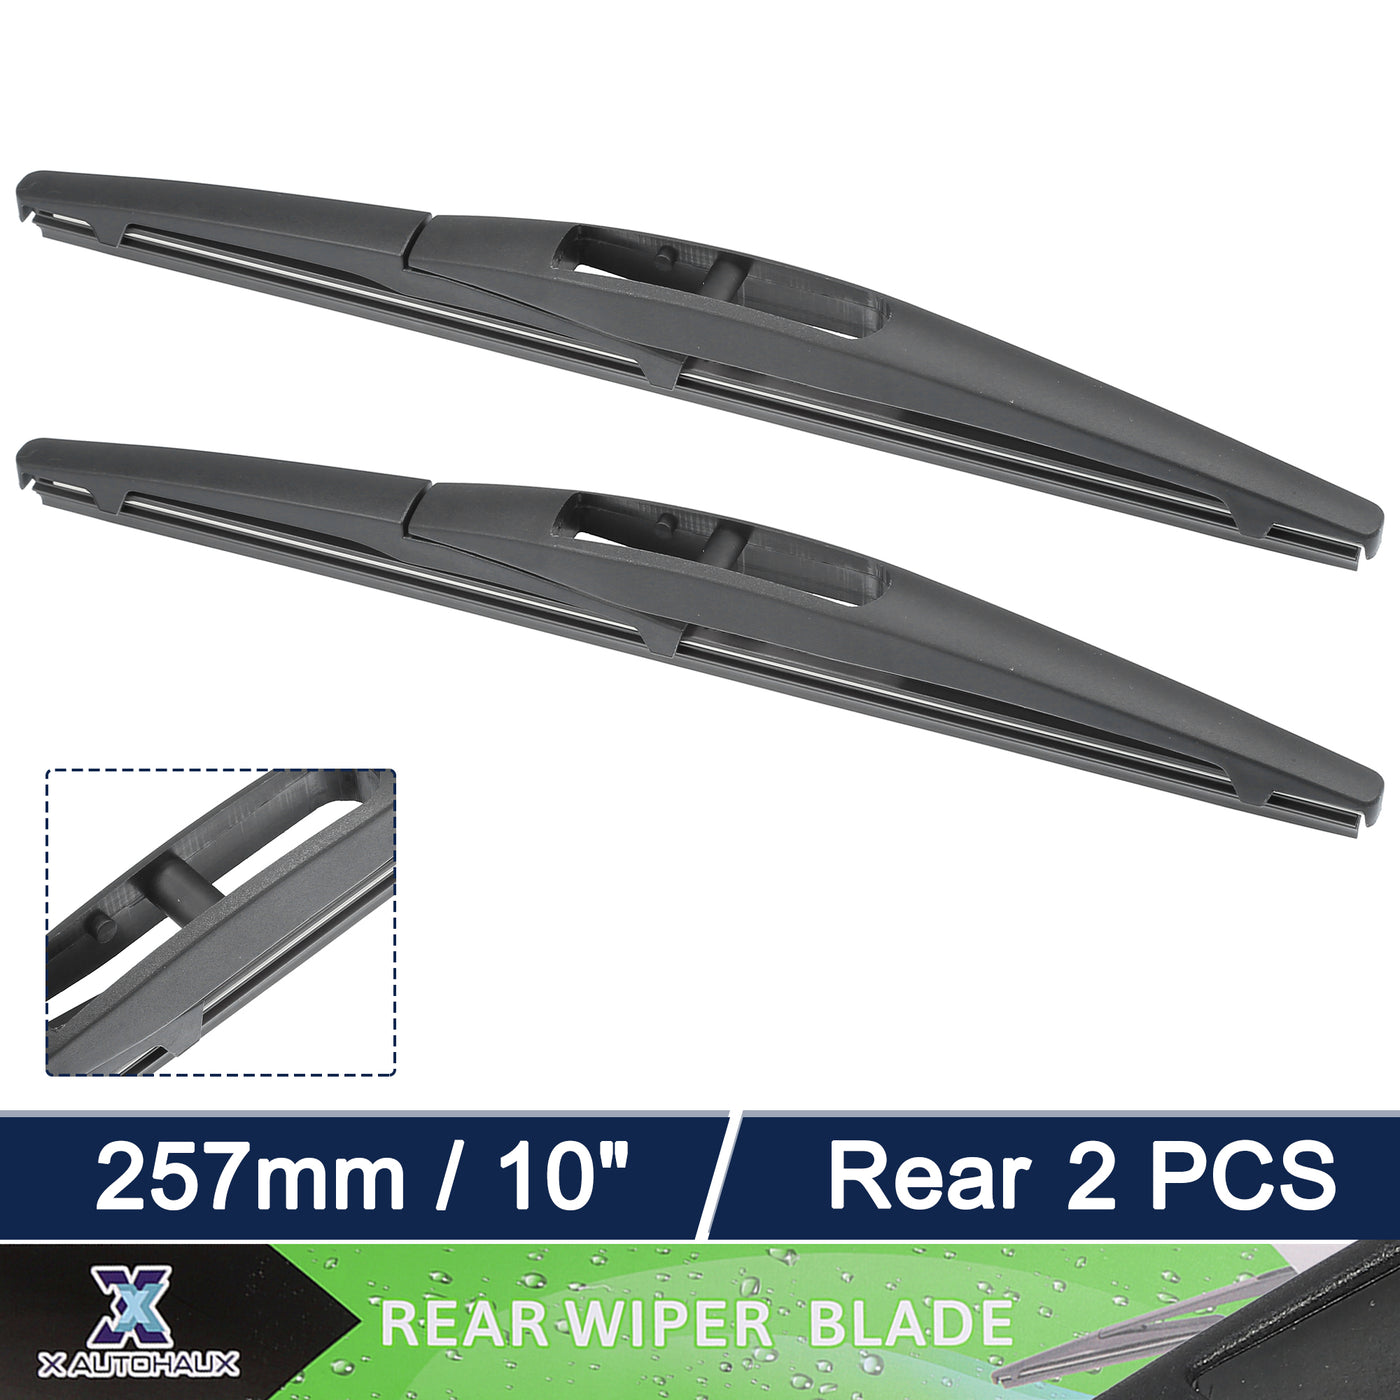 X AUTOHAUX 2pcs Rear Windshield Wiper Blades Replacement for Infiniti QX56 2008-2016 for Suzuki Swift 2005-2016 for Suzuki Sx4 2006-2016